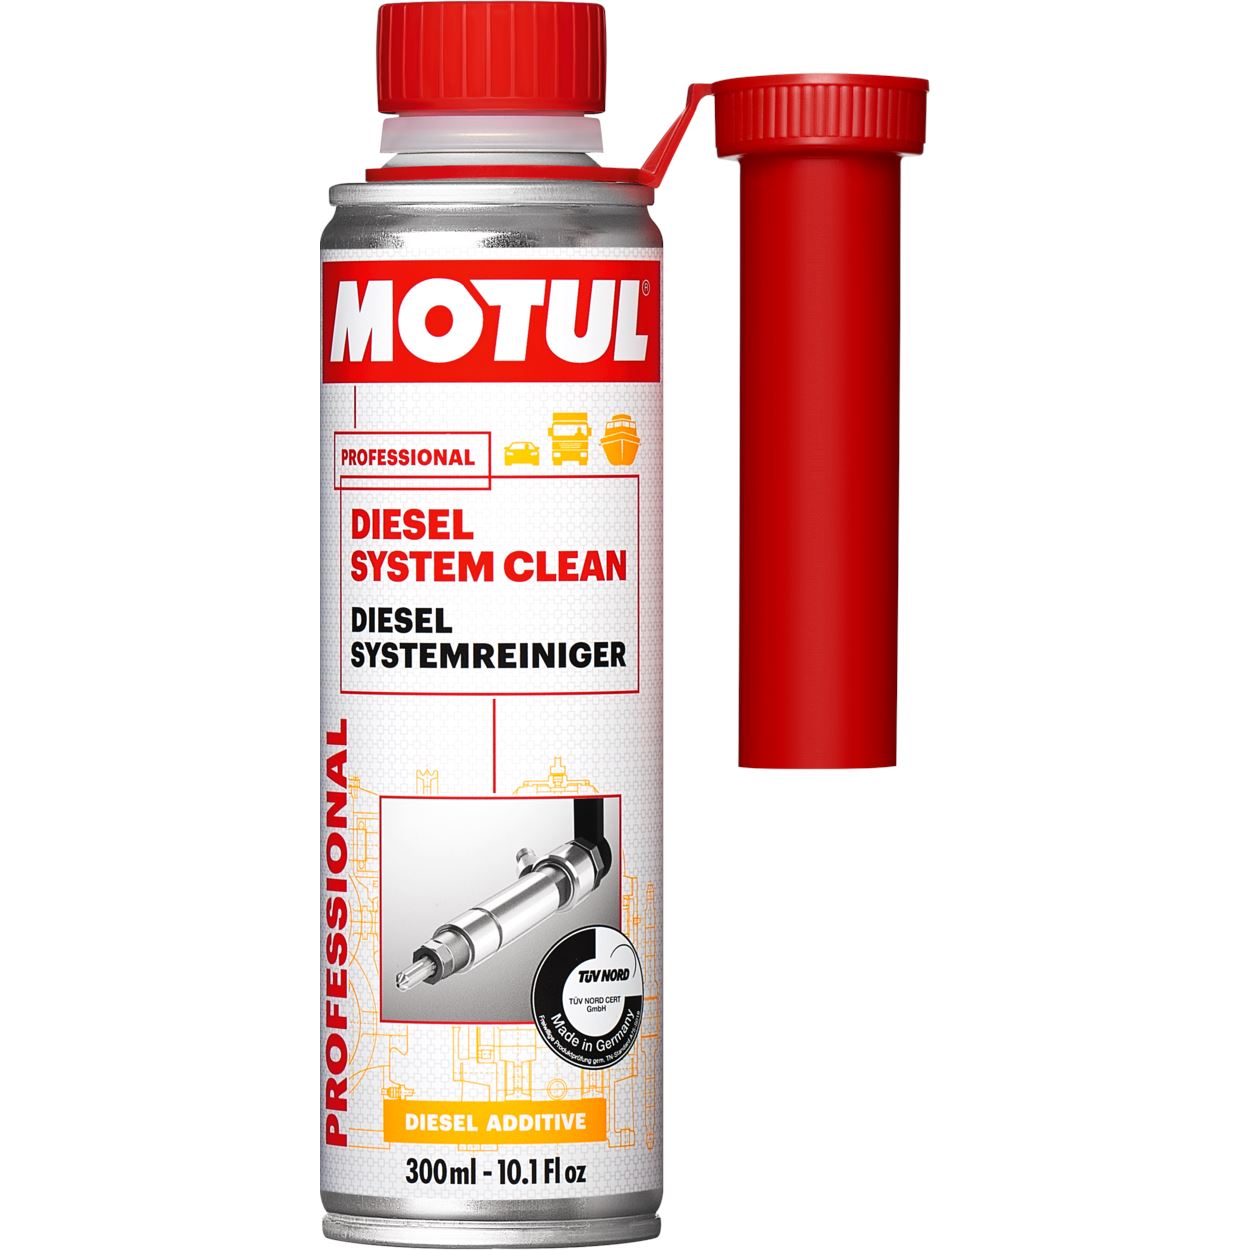 diesel-system-clean-auto-heavy-duty-products-motul-egypt-469036.jpg